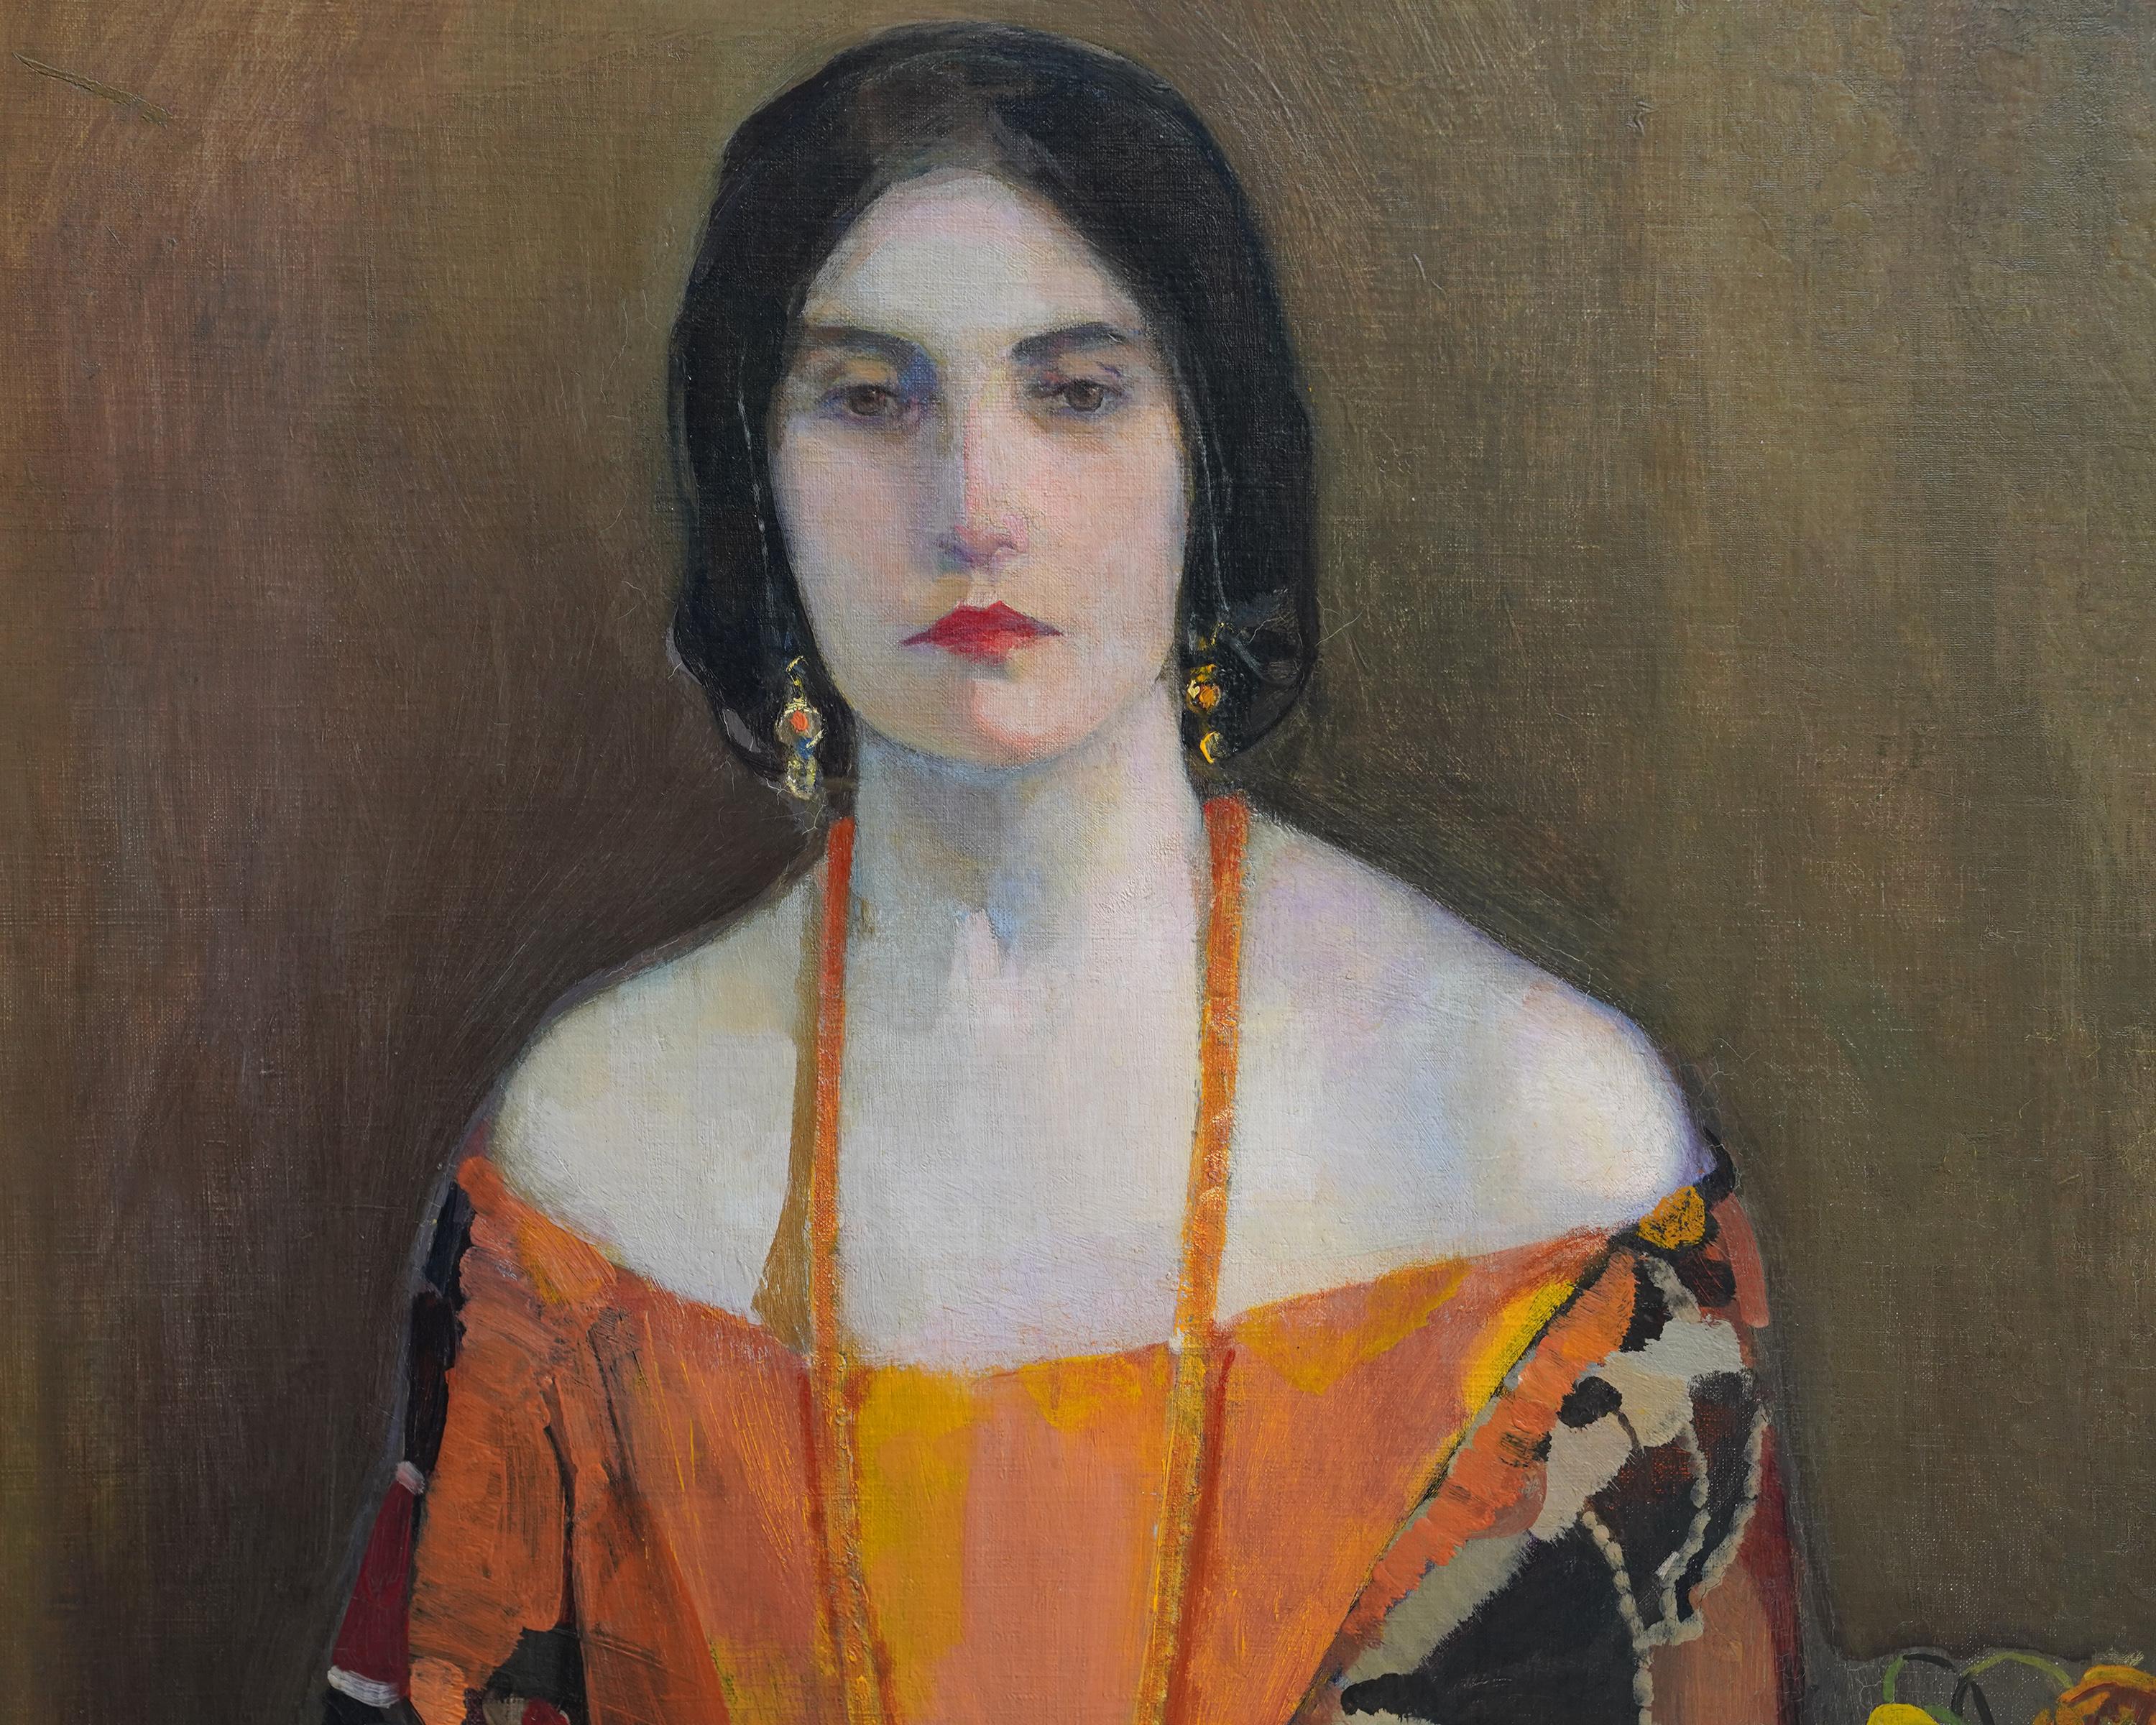 Exotic - Scottish 1920's exhibited 'Glasgow Girl' art portrait oil painting - Art Deco Painting by Norah Neilson Gray